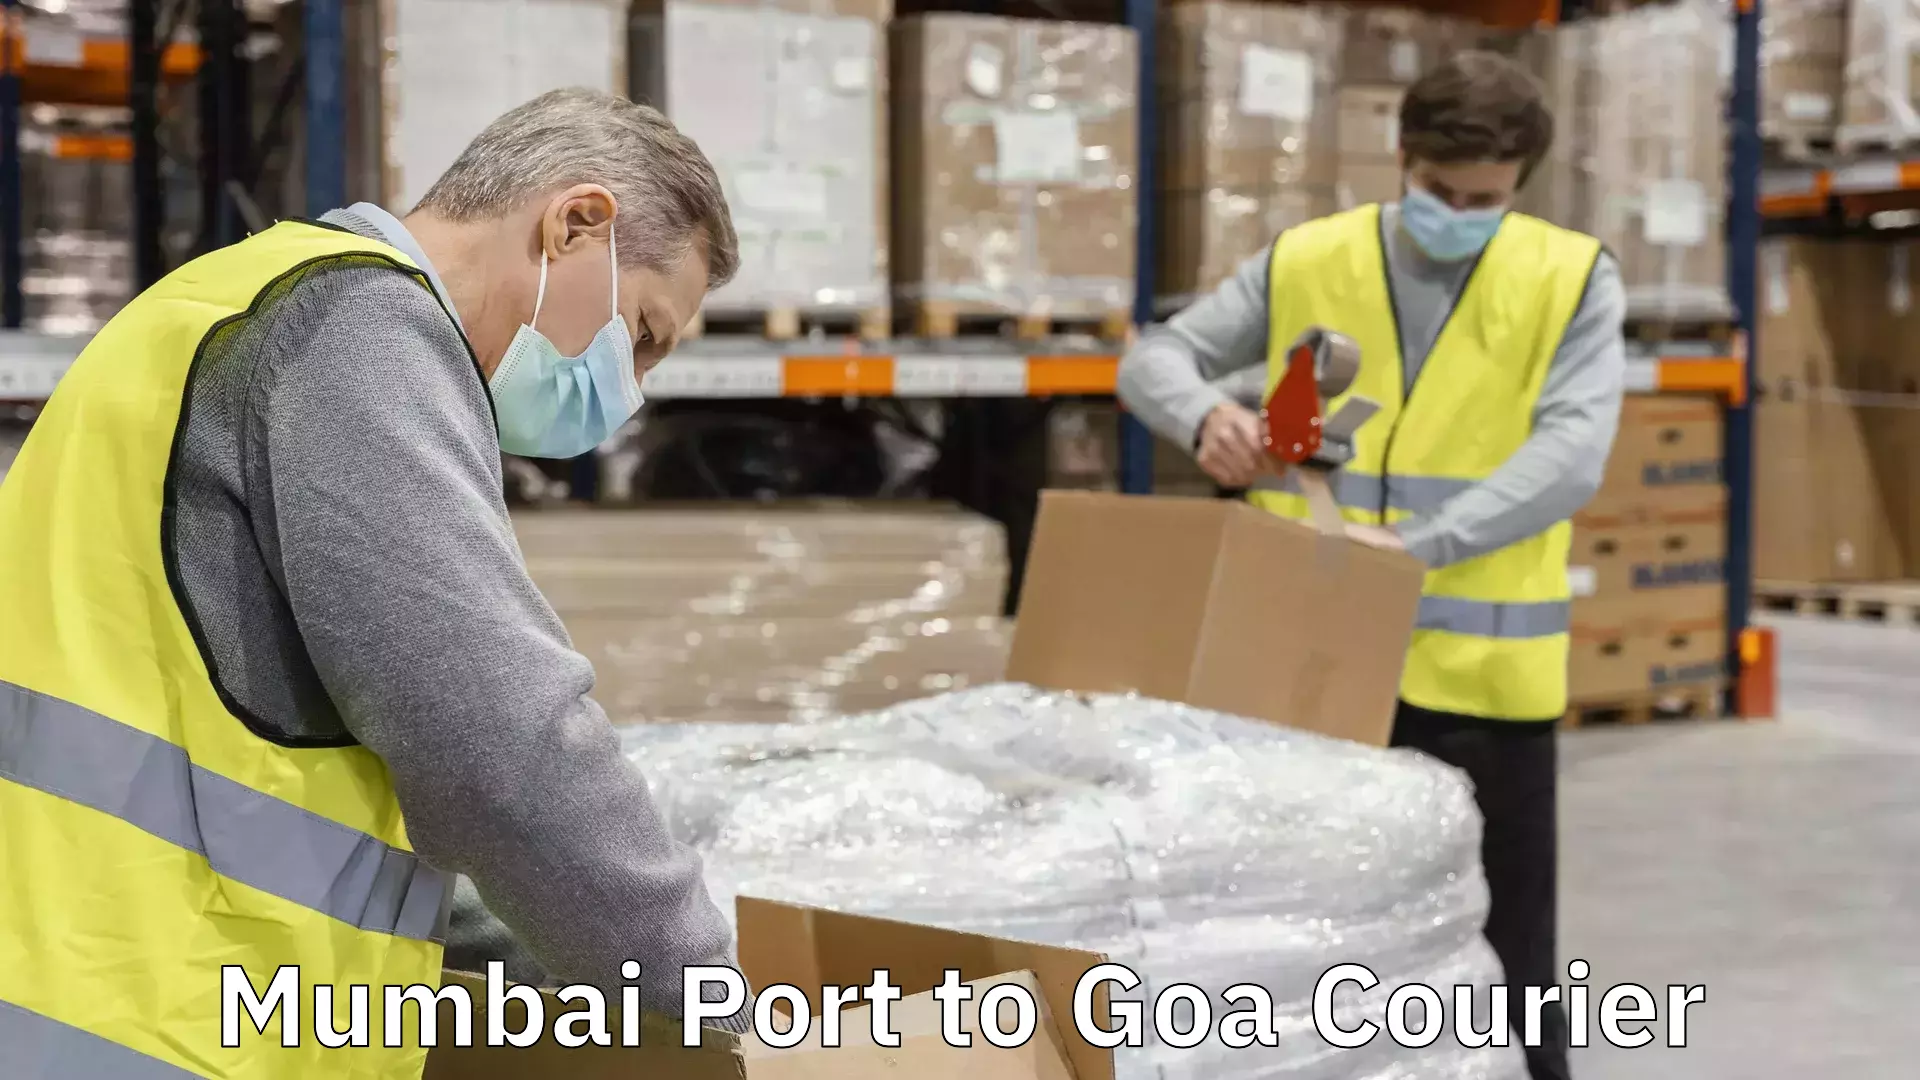 Long distance courier Mumbai Port to Goa